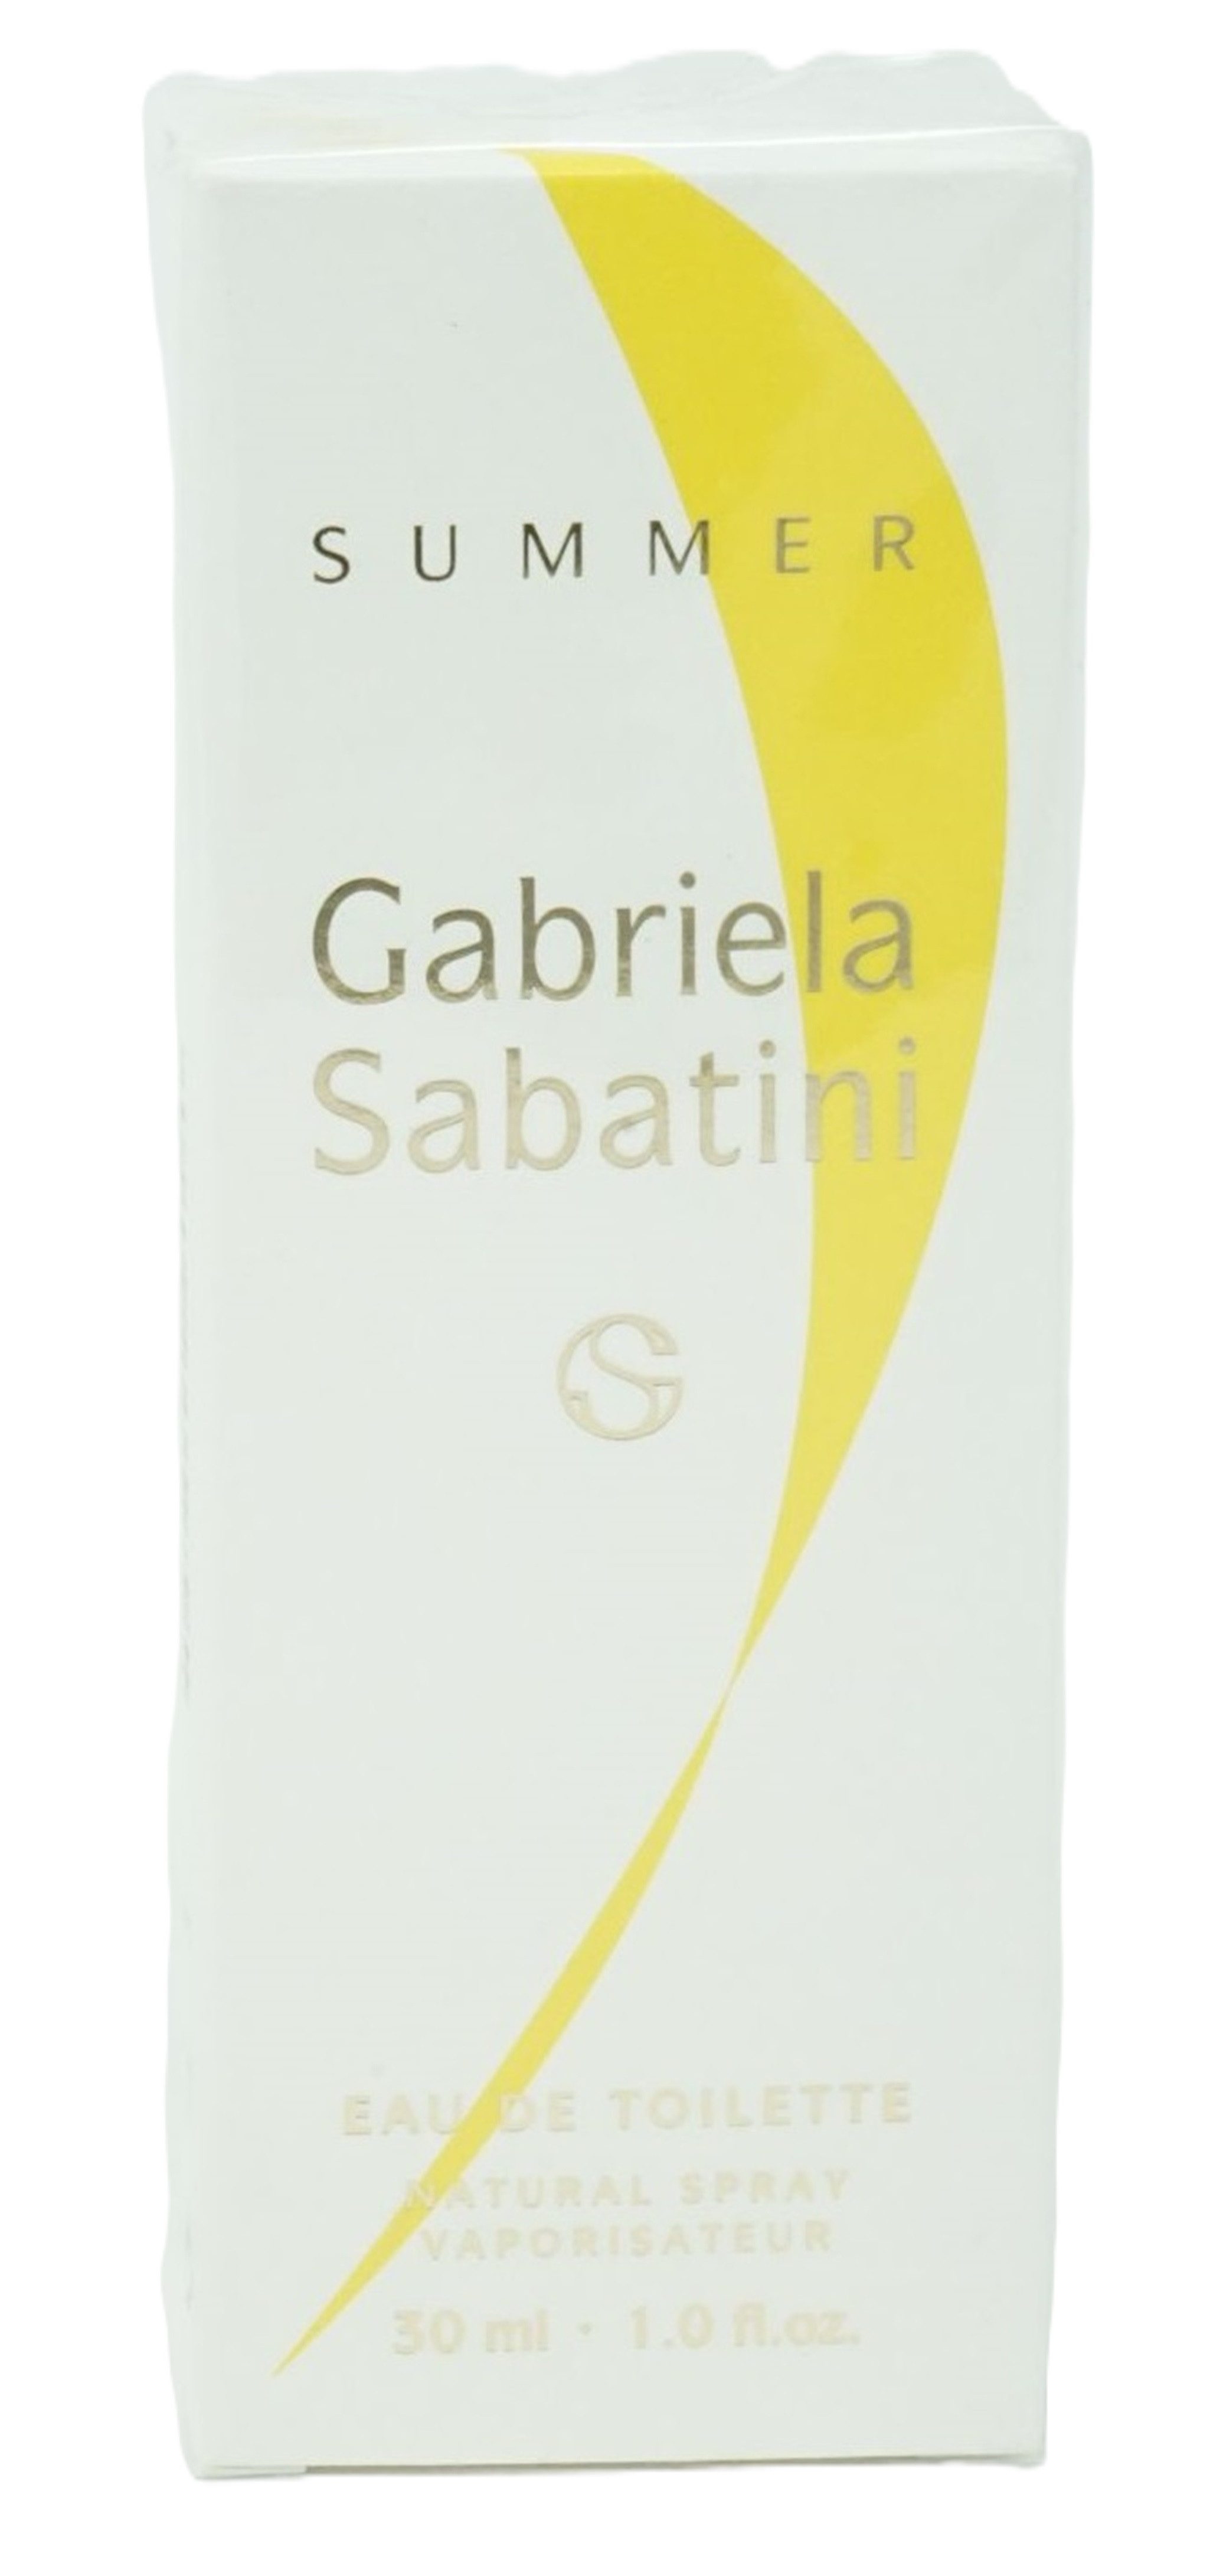 Gabriela Sabatini Eau de Toilette Gabriela Sabatini Summer Eau de Toilette Spray 30 ml